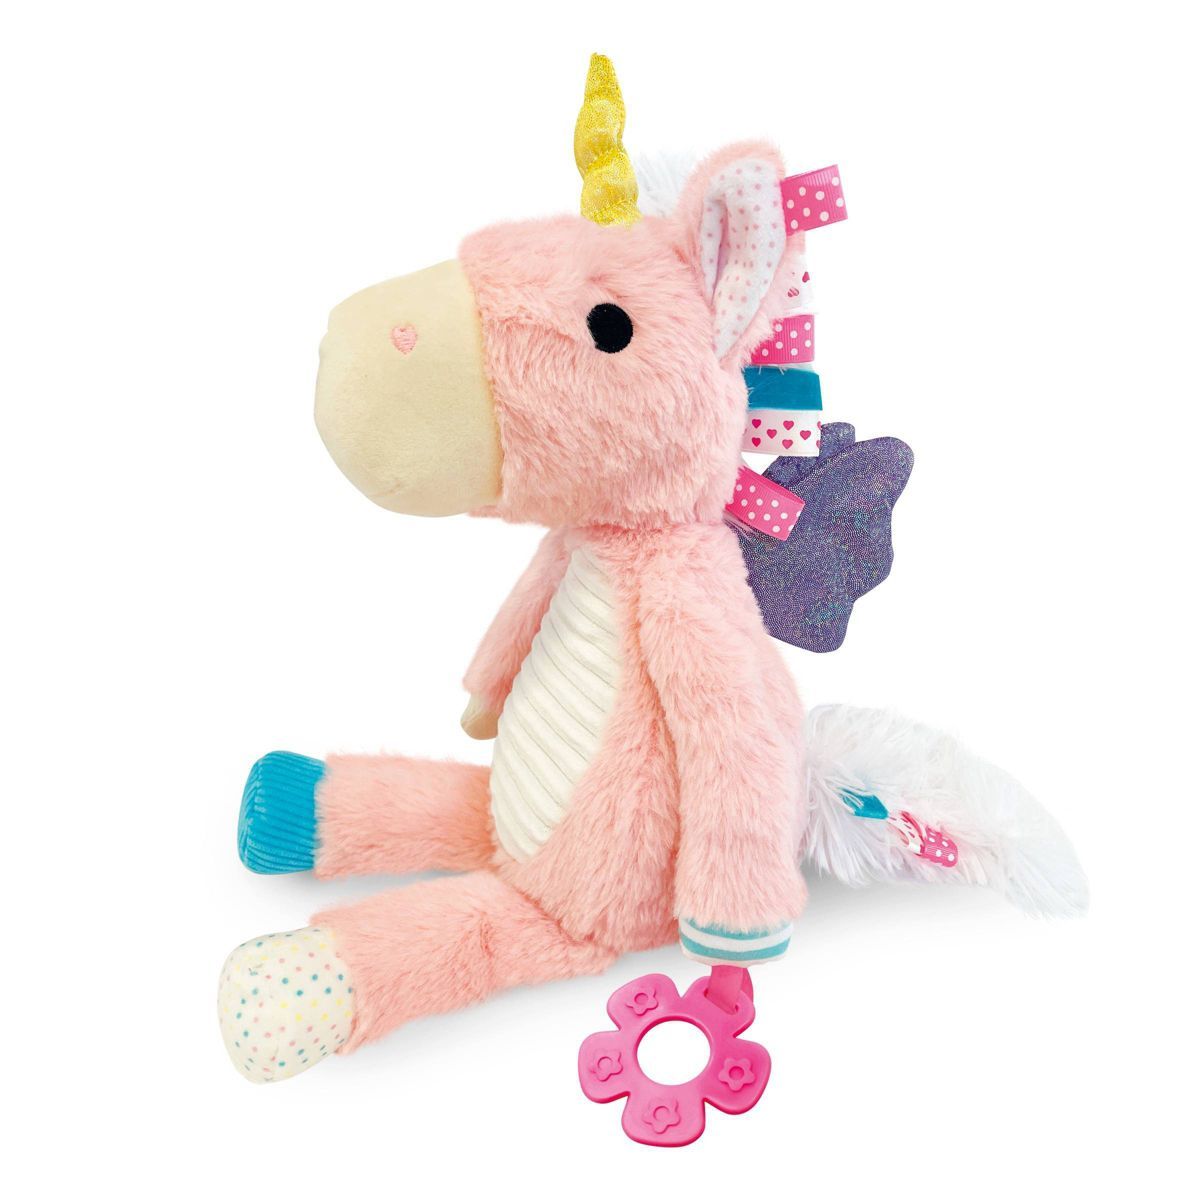 Make Believe Ideas Sensory Snuggables Plush Stuffed Animal - Unicorn | Target